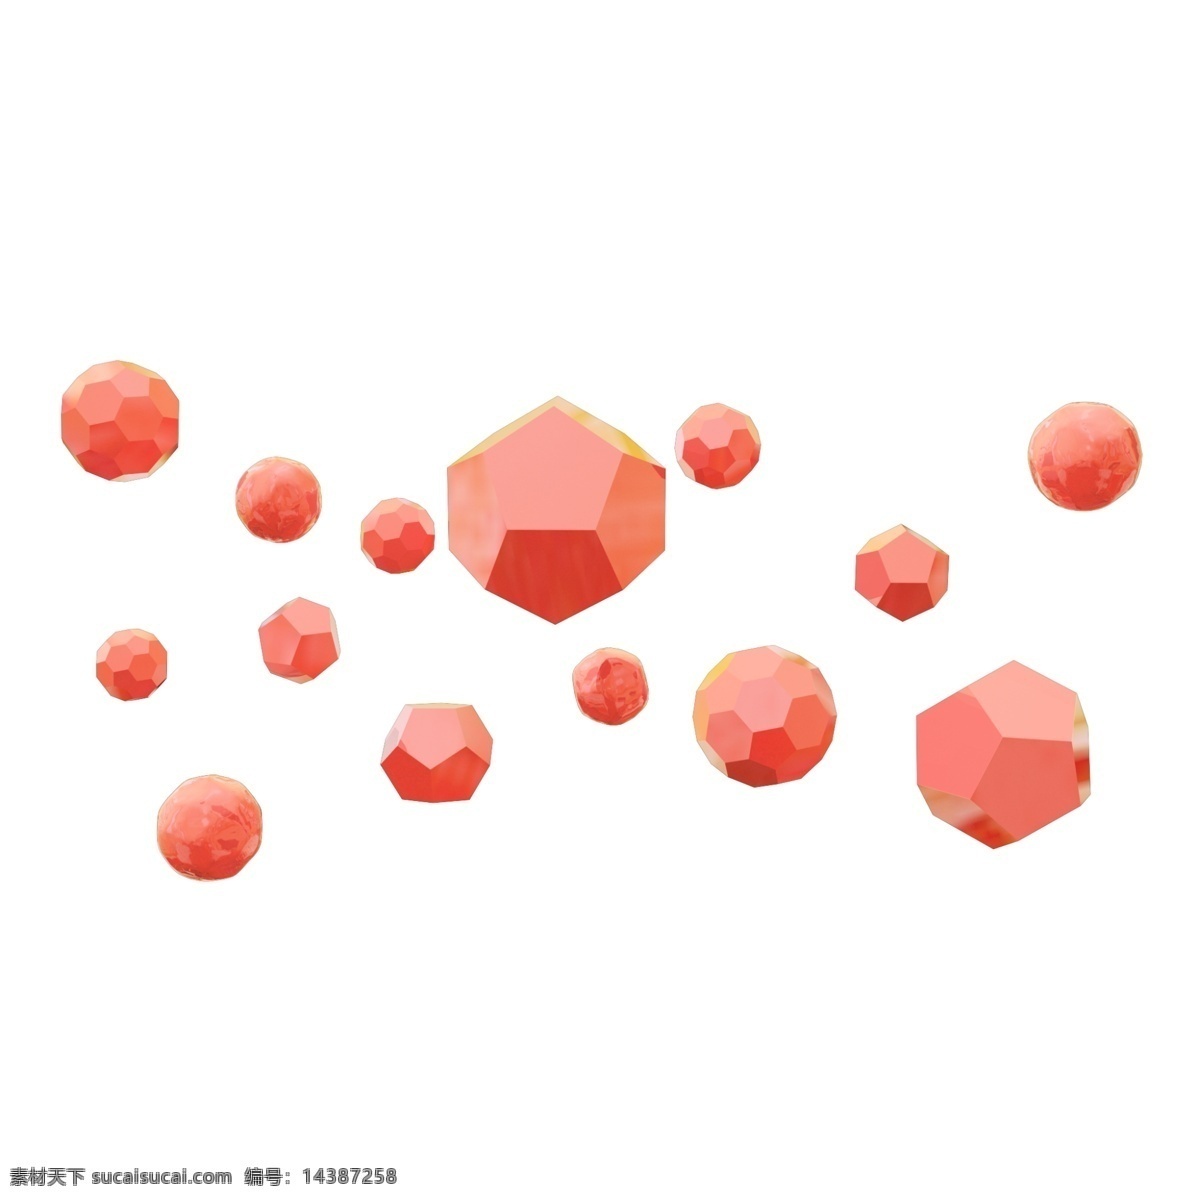 3d 红色 多边形 漂浮 颗粒 卡通 立体 c4d 电商 椭圆形 悬浮颗粒 粉色 漂浮多边形 粉色椭圆形 粉色多边形 卡通粉色